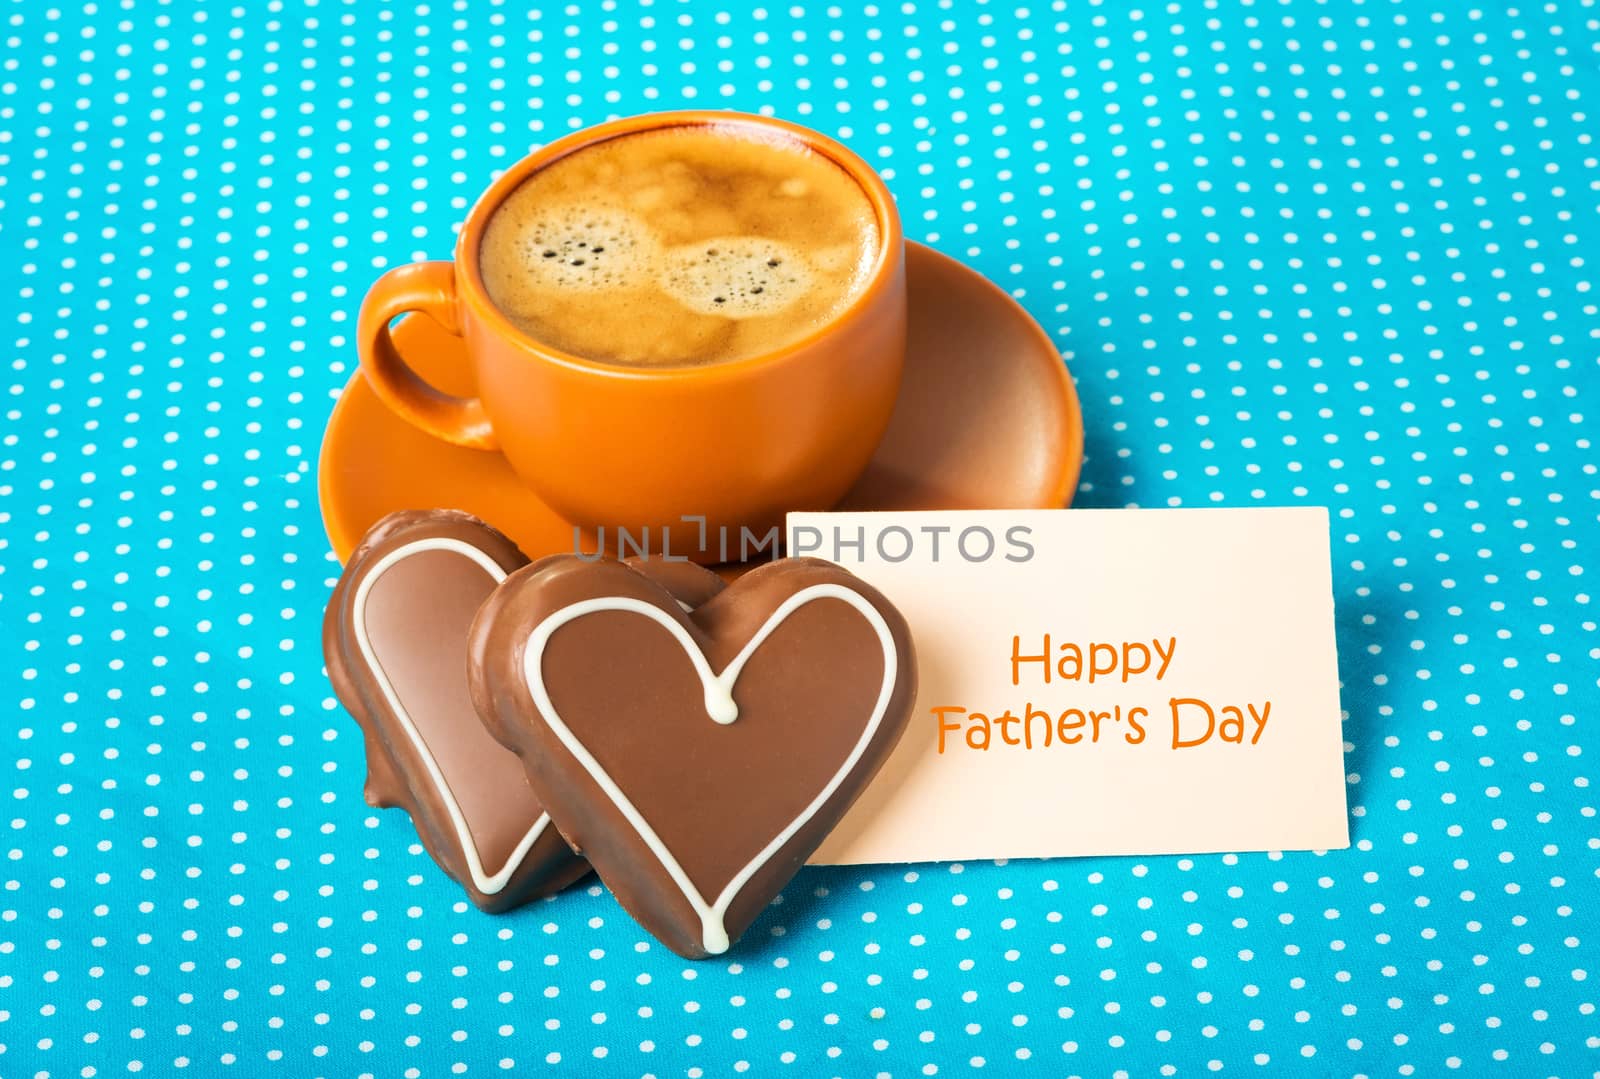 Happy Father's Day by iprachenko